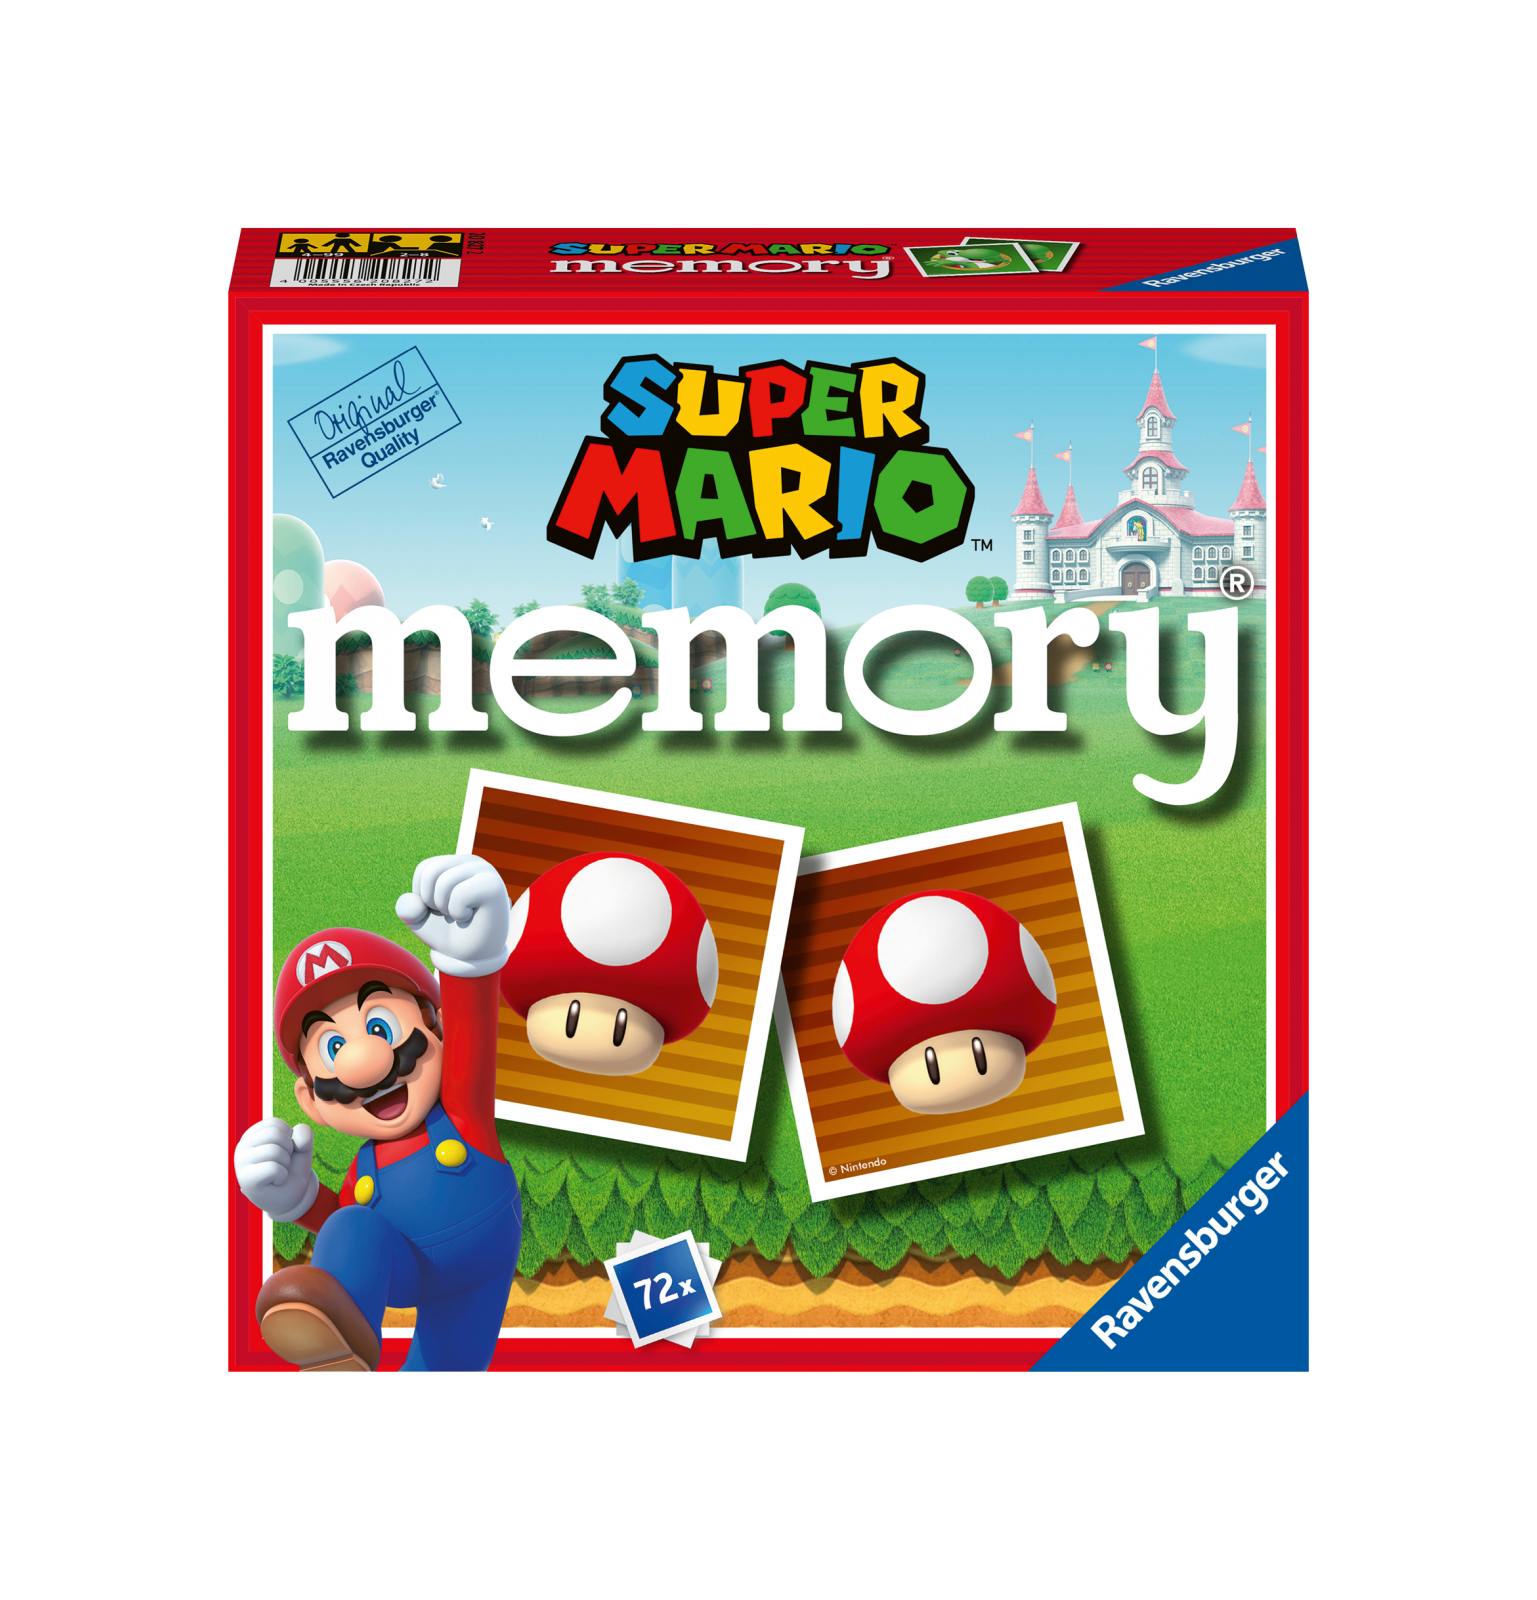 Ravensburger - memory versione super mario, 72 tessere, gioco da tavolo, 4+ anni - RAVENSBURGER, Super Mario